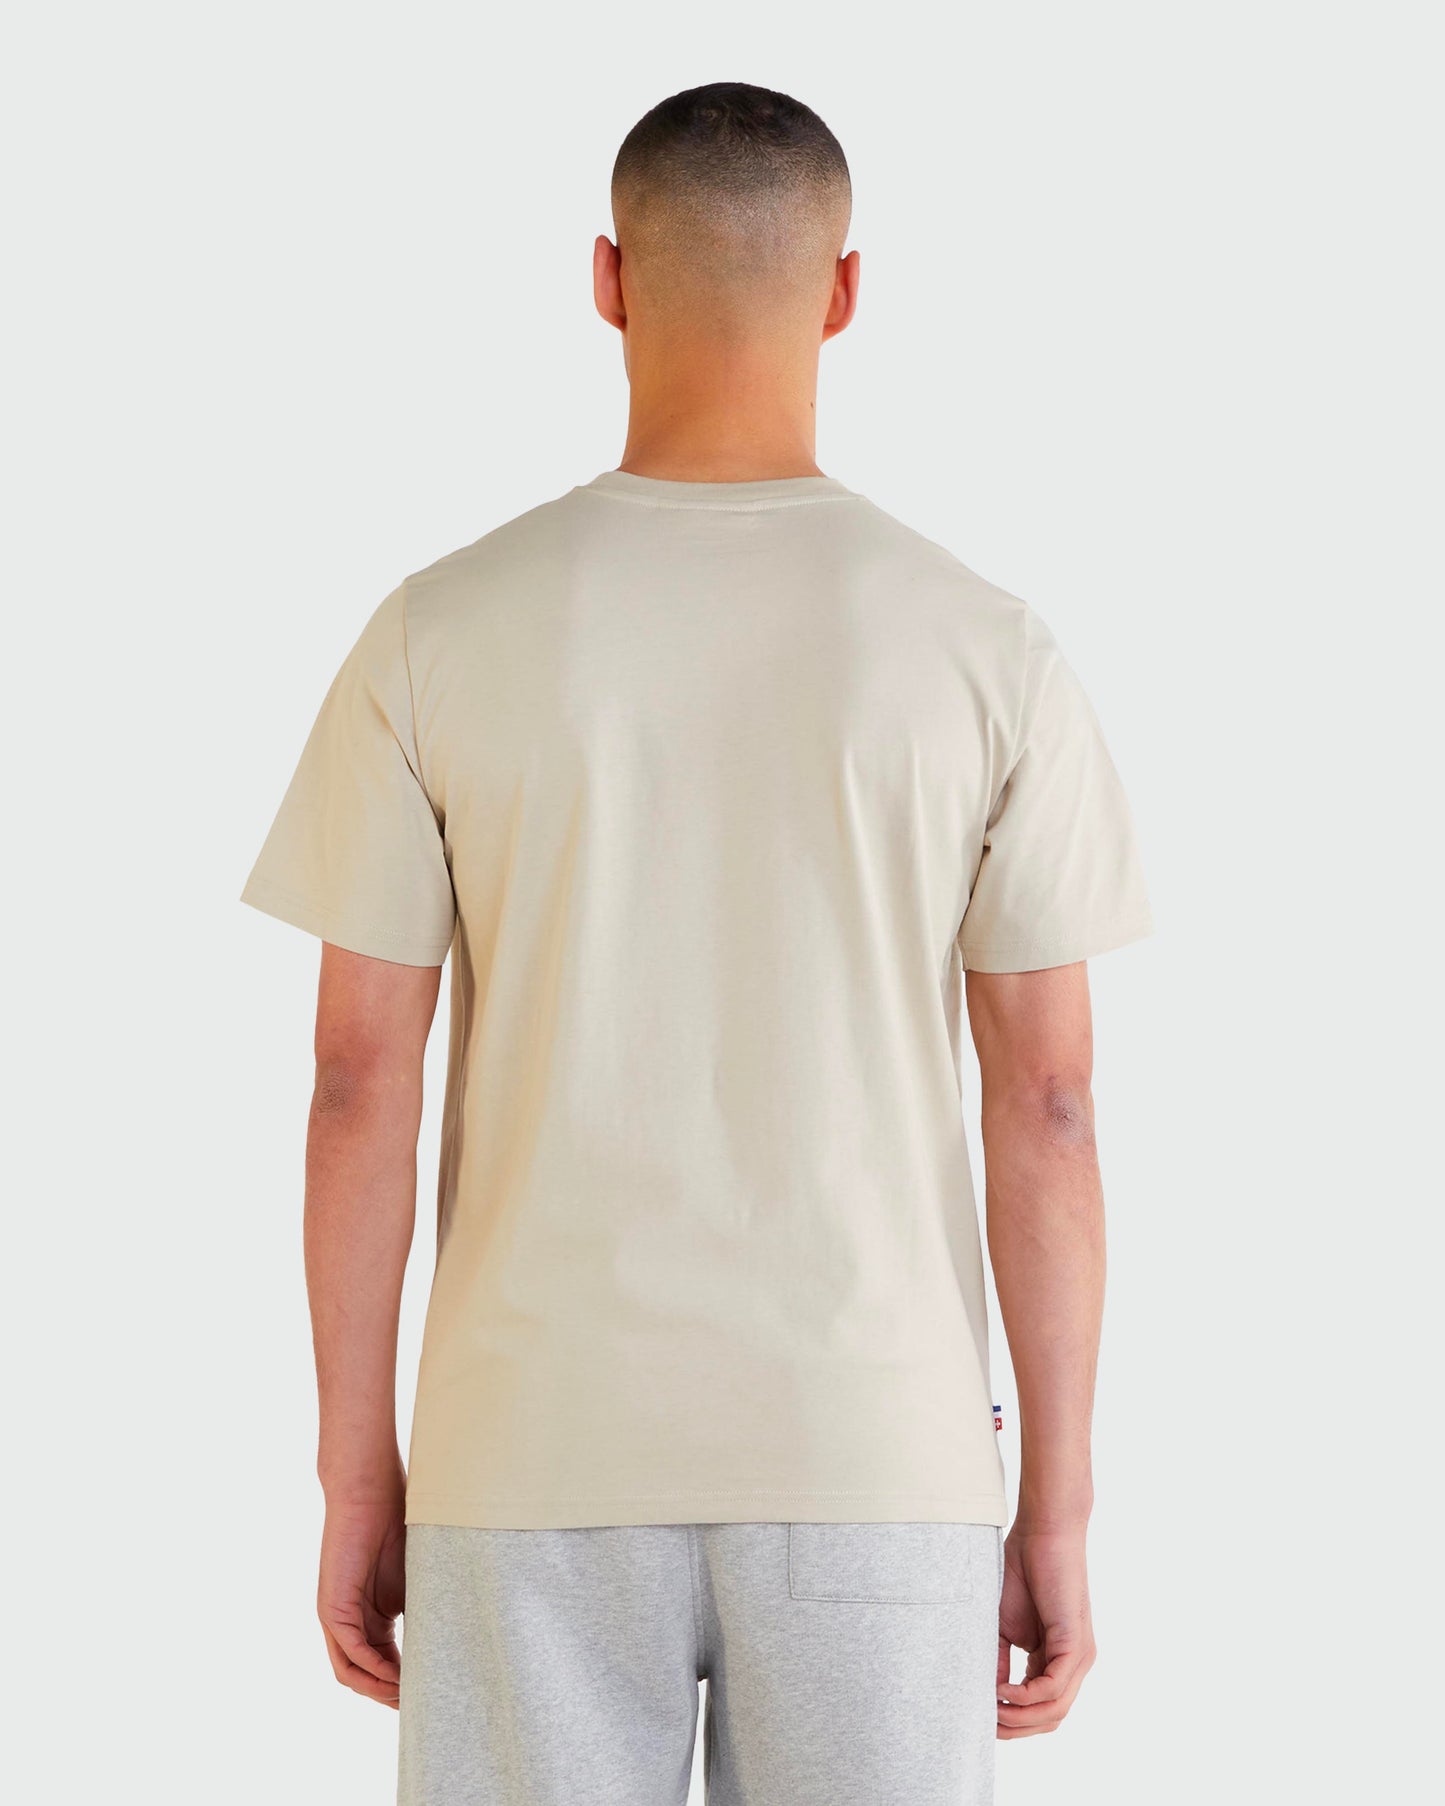 t-shirt-source-feather-gray-v3-avnier-orelsan-4-silhouette-dos2_f2bf6654-c7bf-482d-8663-af8b97a1fc22 - Beige travertin